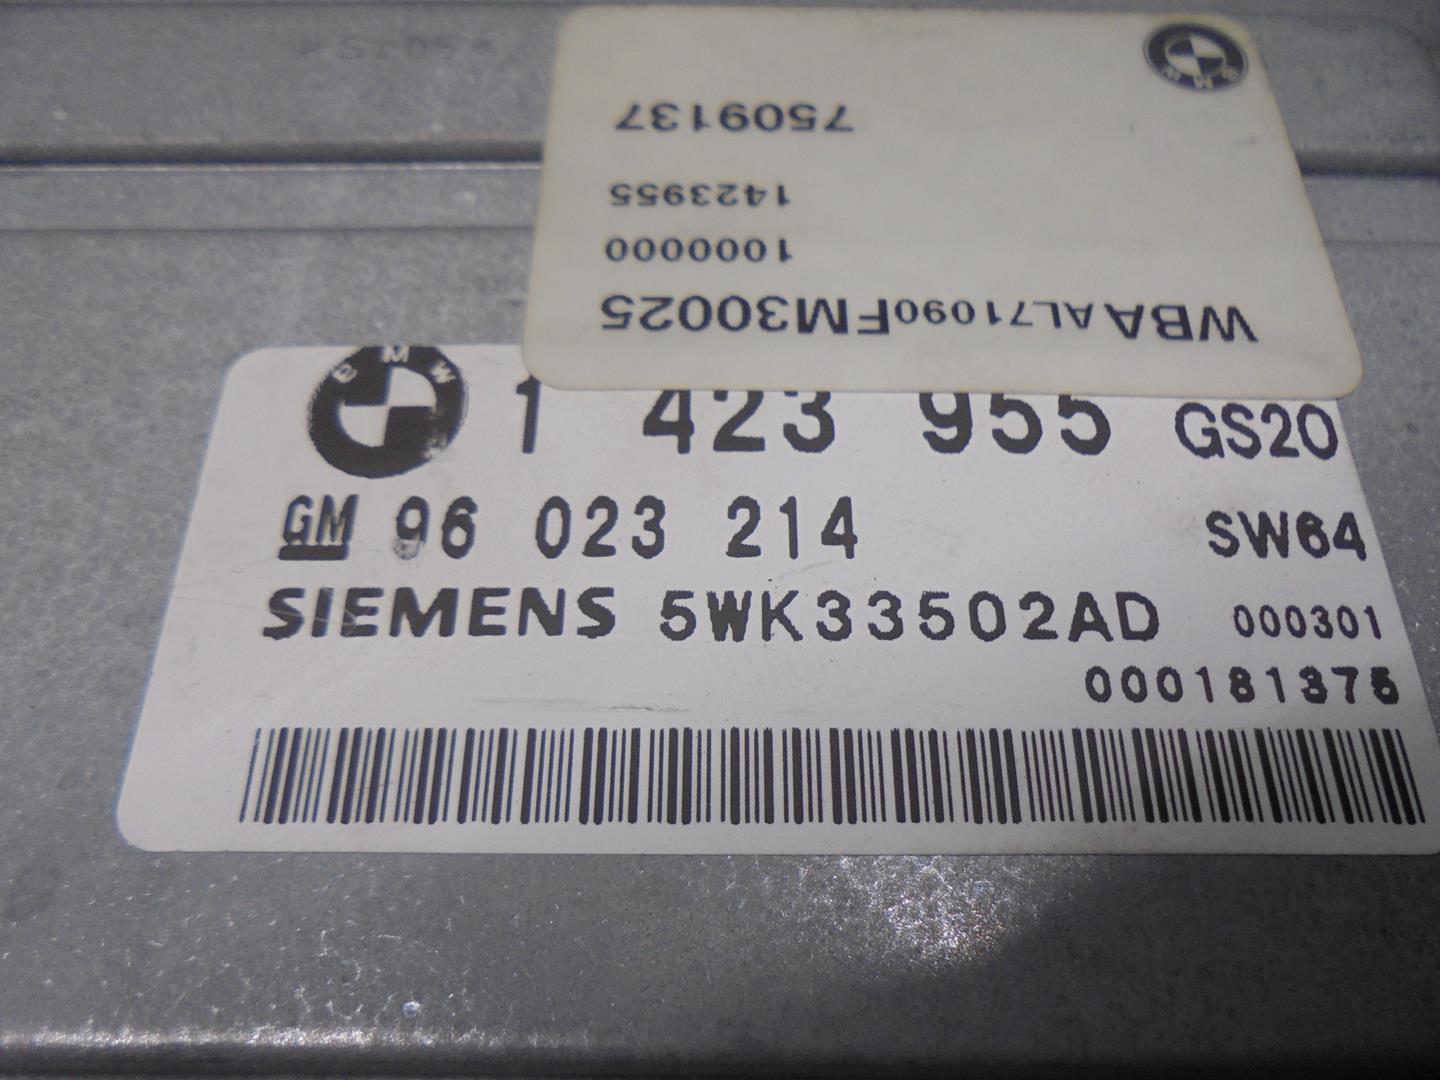 BMW 3 Series E46 (1997-2006) Gearbox Control Unit 1423955, 96023214 24189676